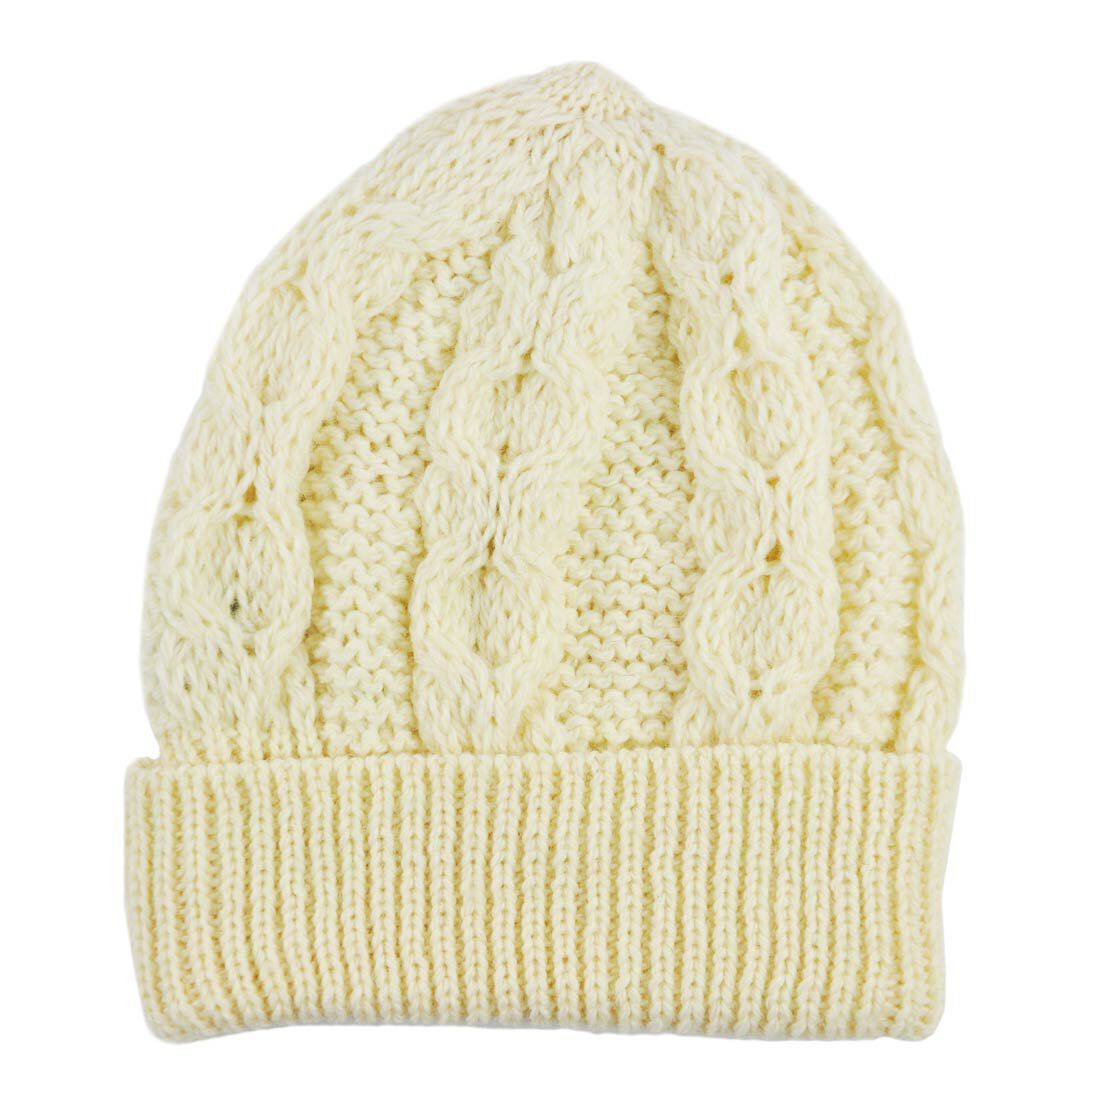 Buy Merino Wool Knit Hat Natural | Carrolls Irish Gifts